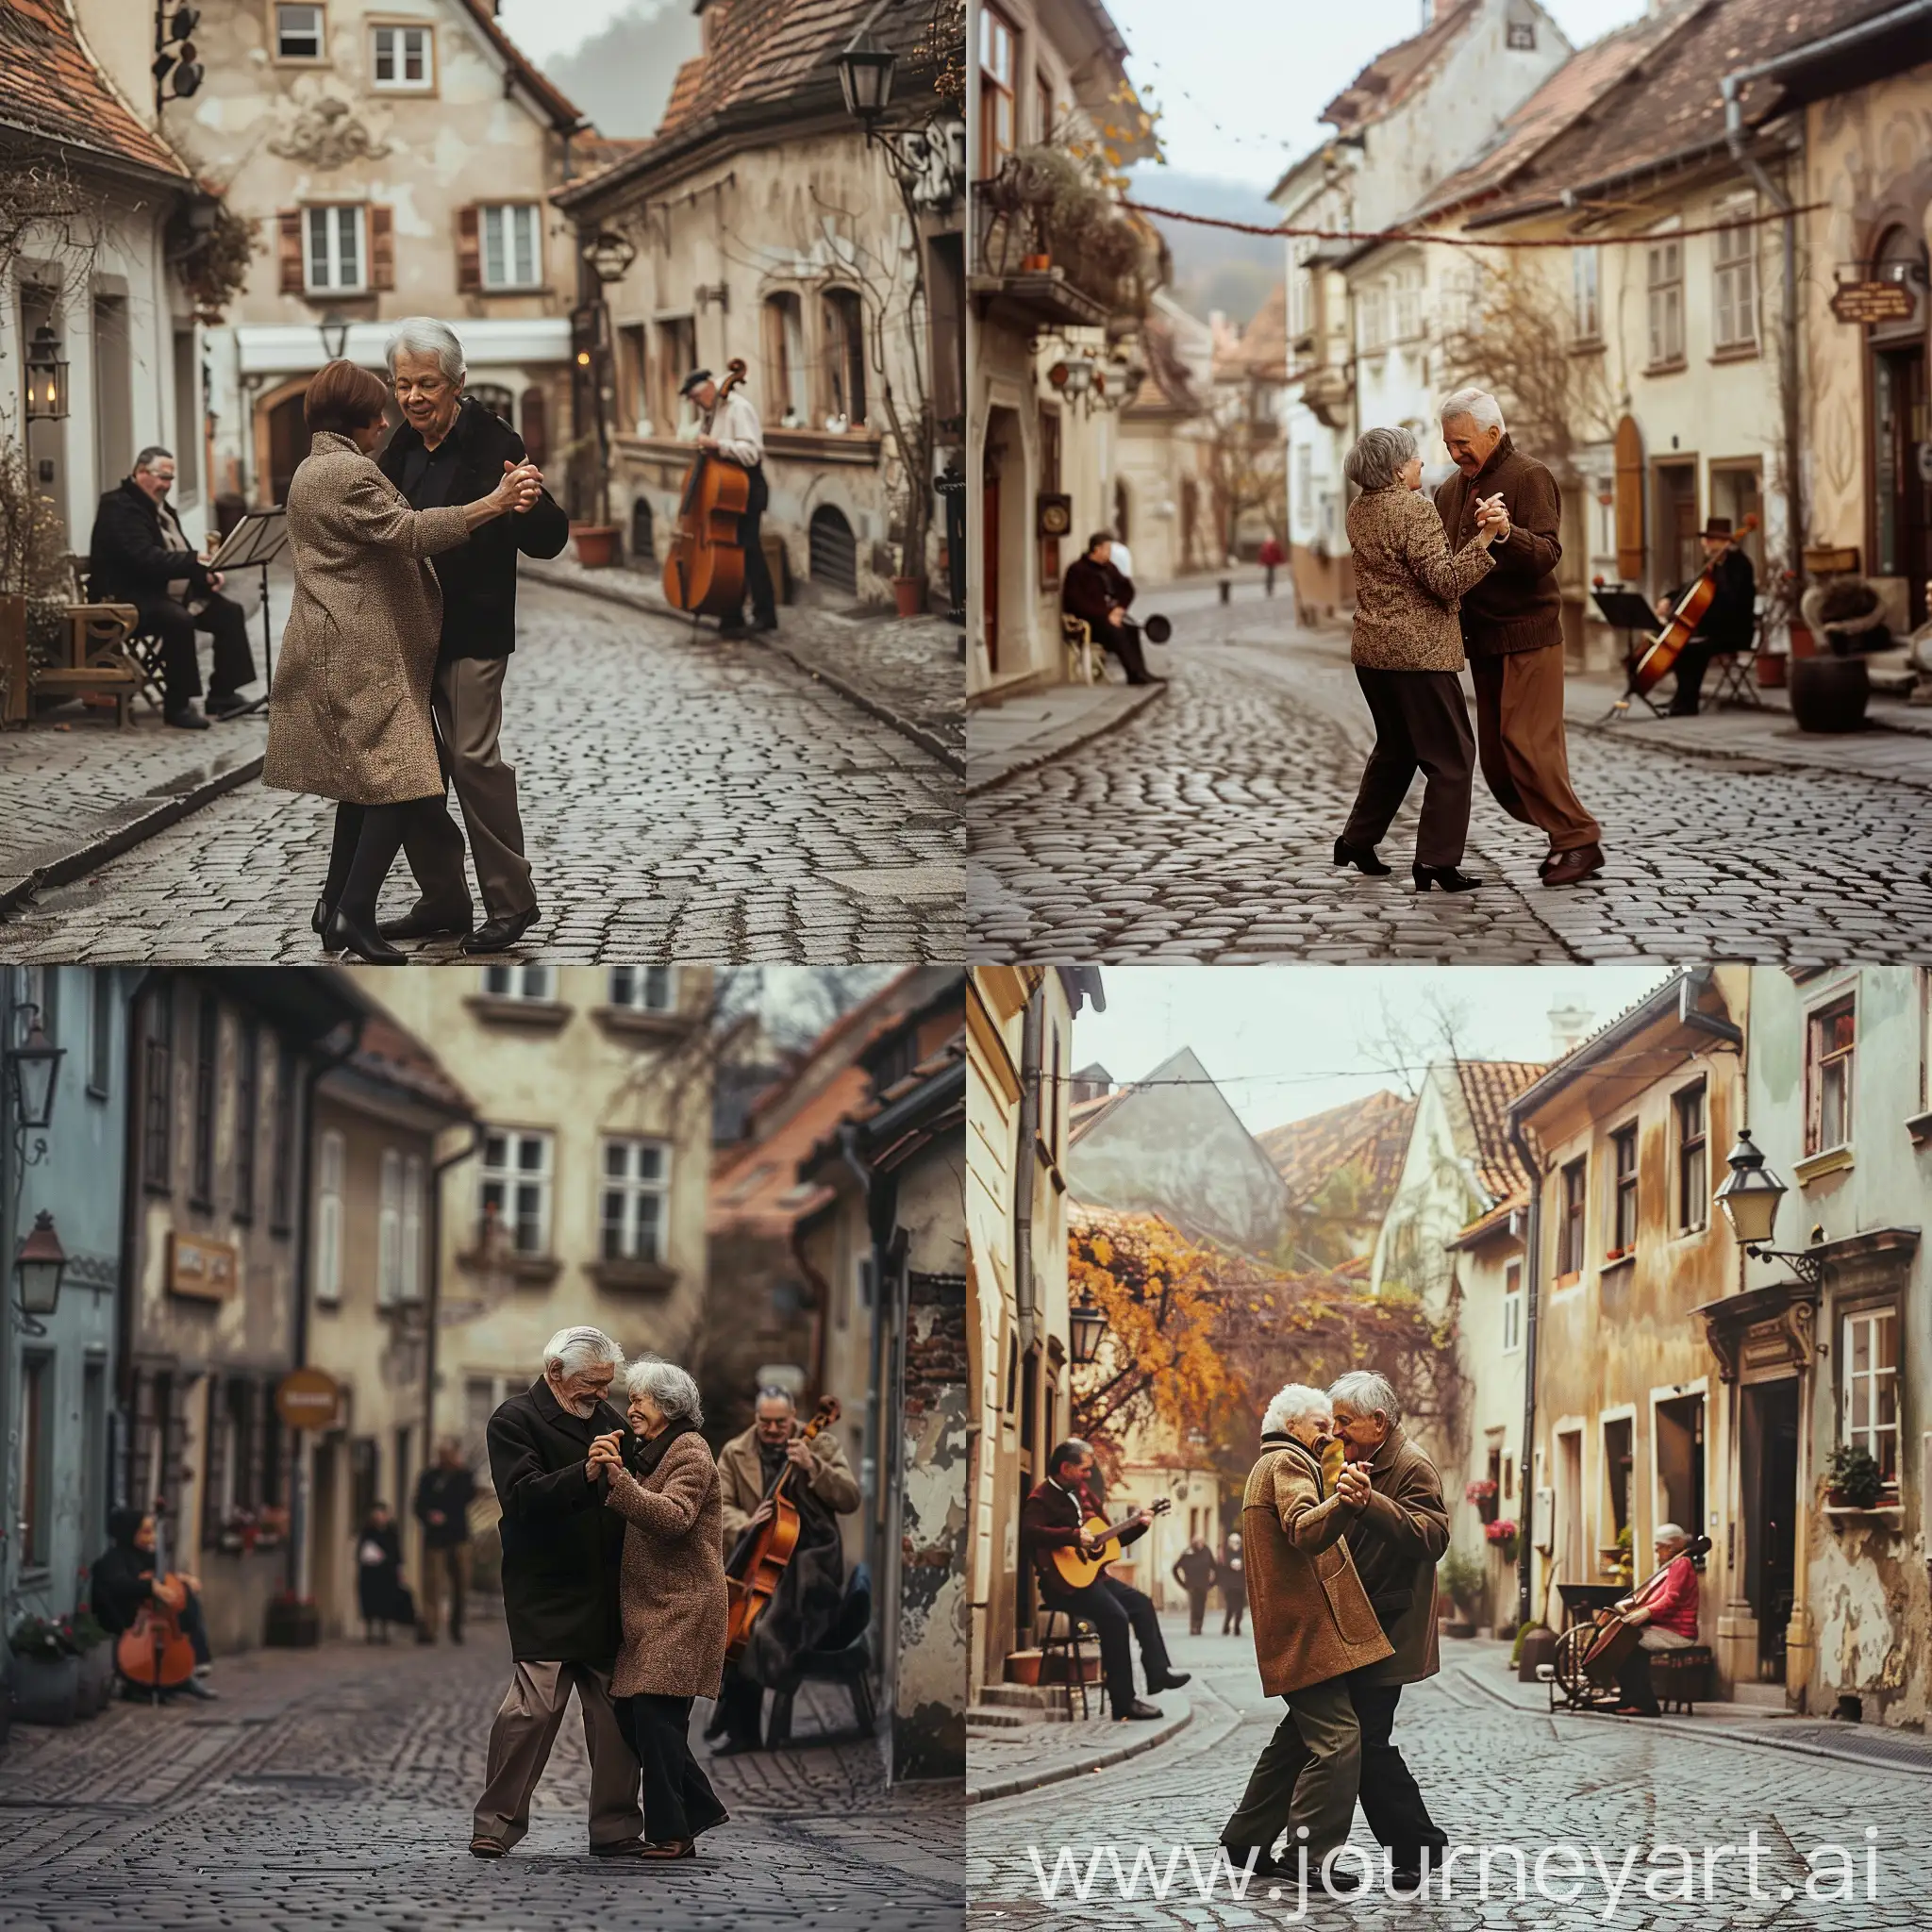 Elderly-Couple-Dancing-on-Cobblestone-Street-Amidst-Romantic-Setting